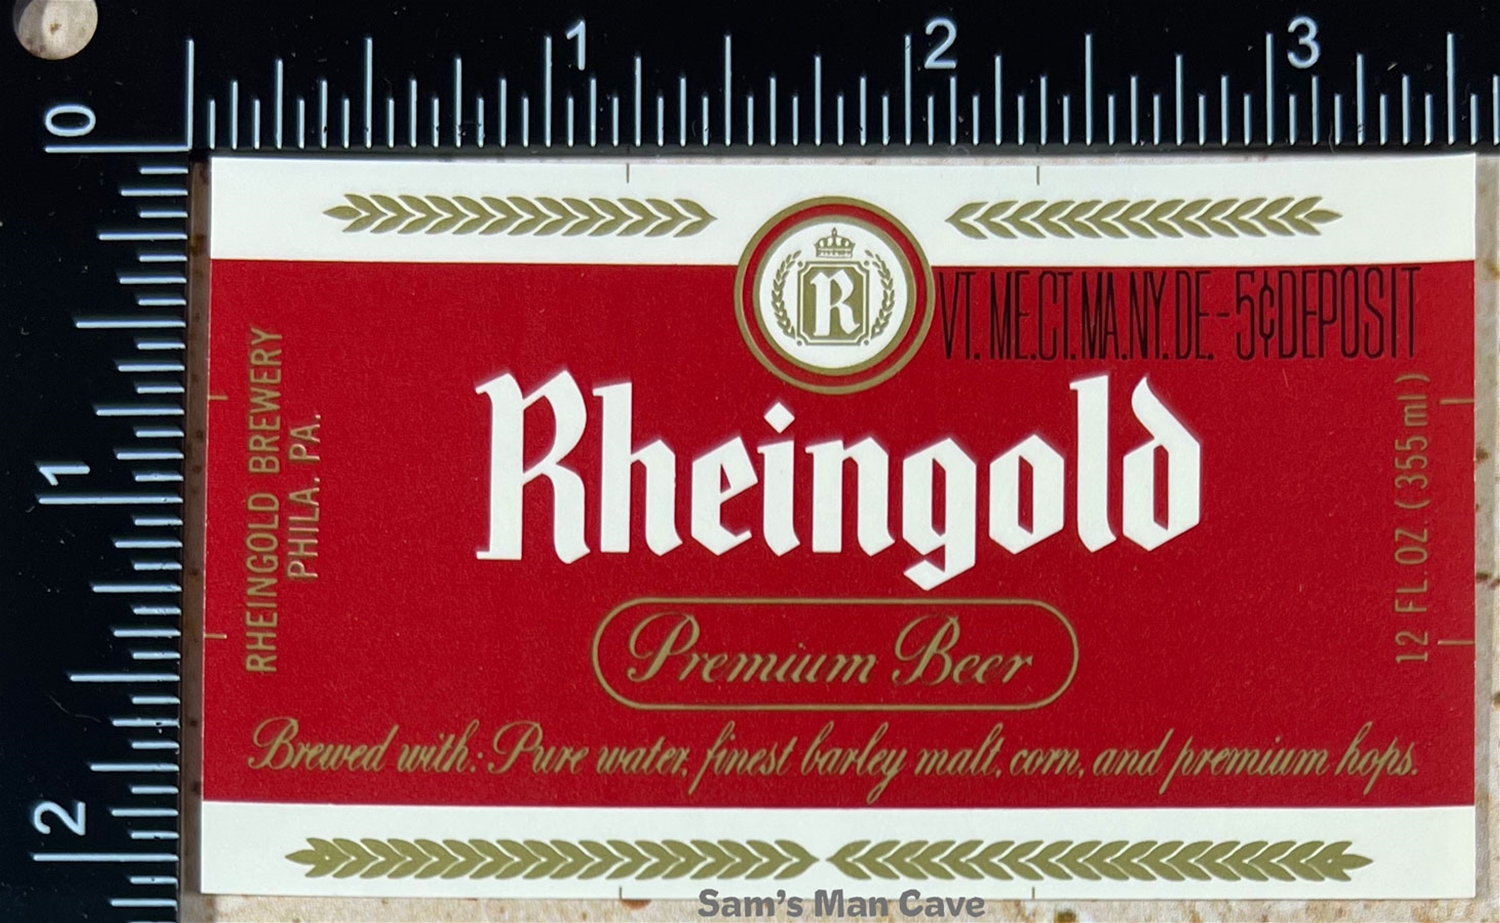 Rheingold Premium Beer Label